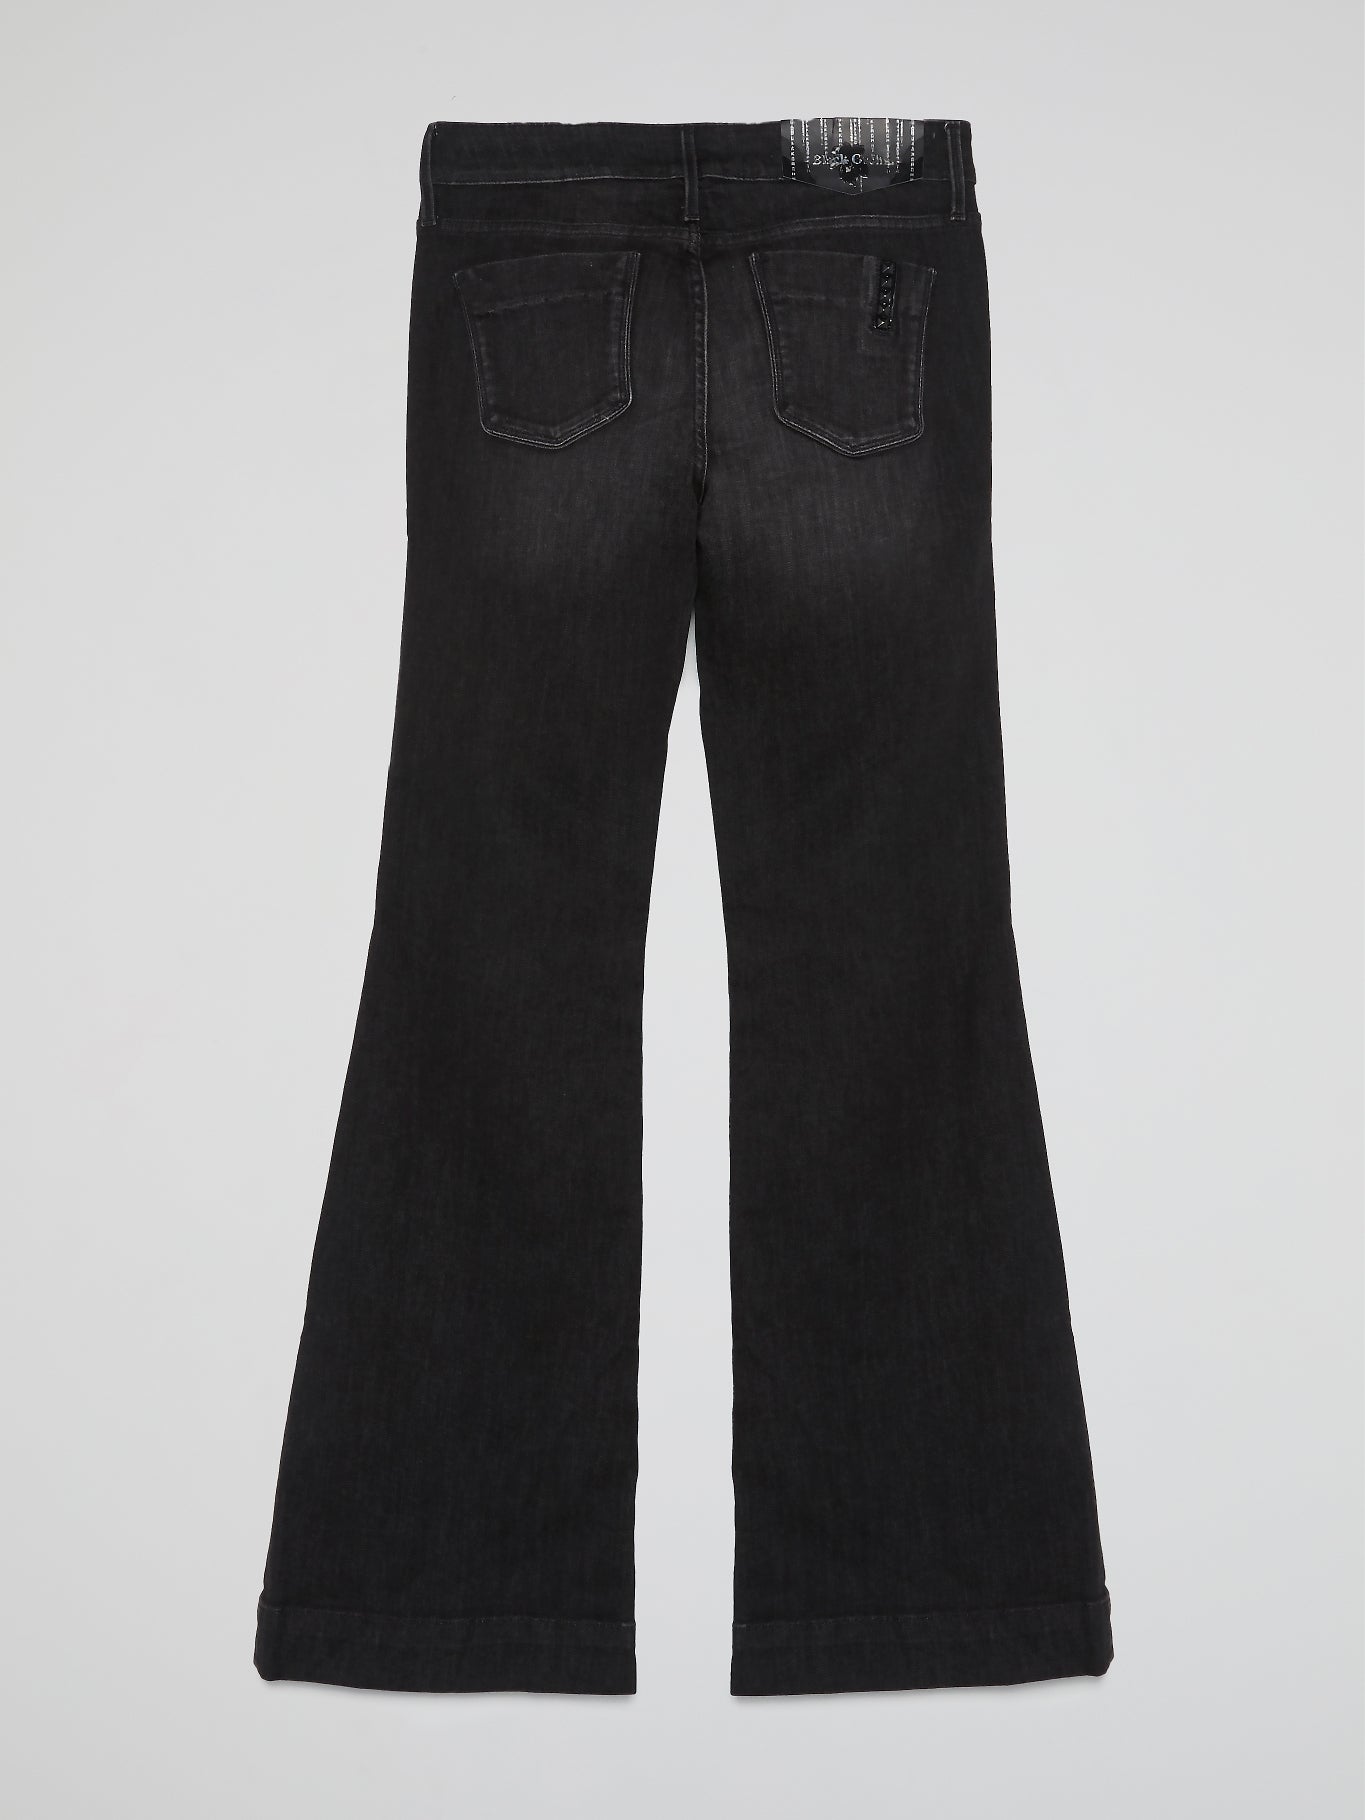 Black Flared Denim Jeans